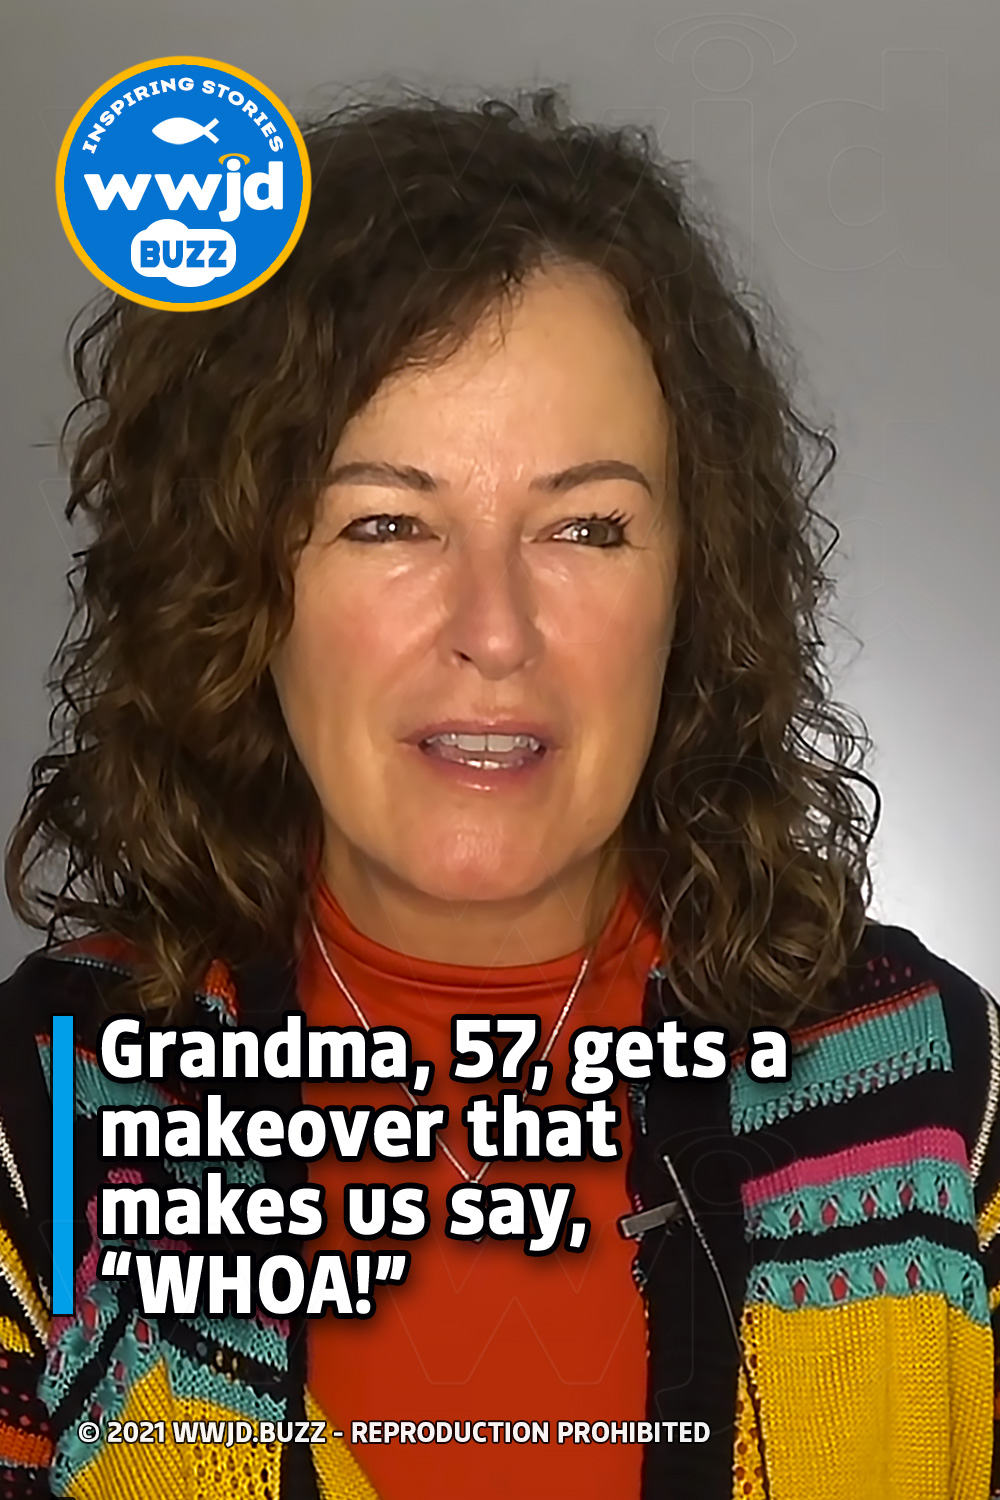 Grandma, 57, gets a makeover that makes us say, “WHOA!”